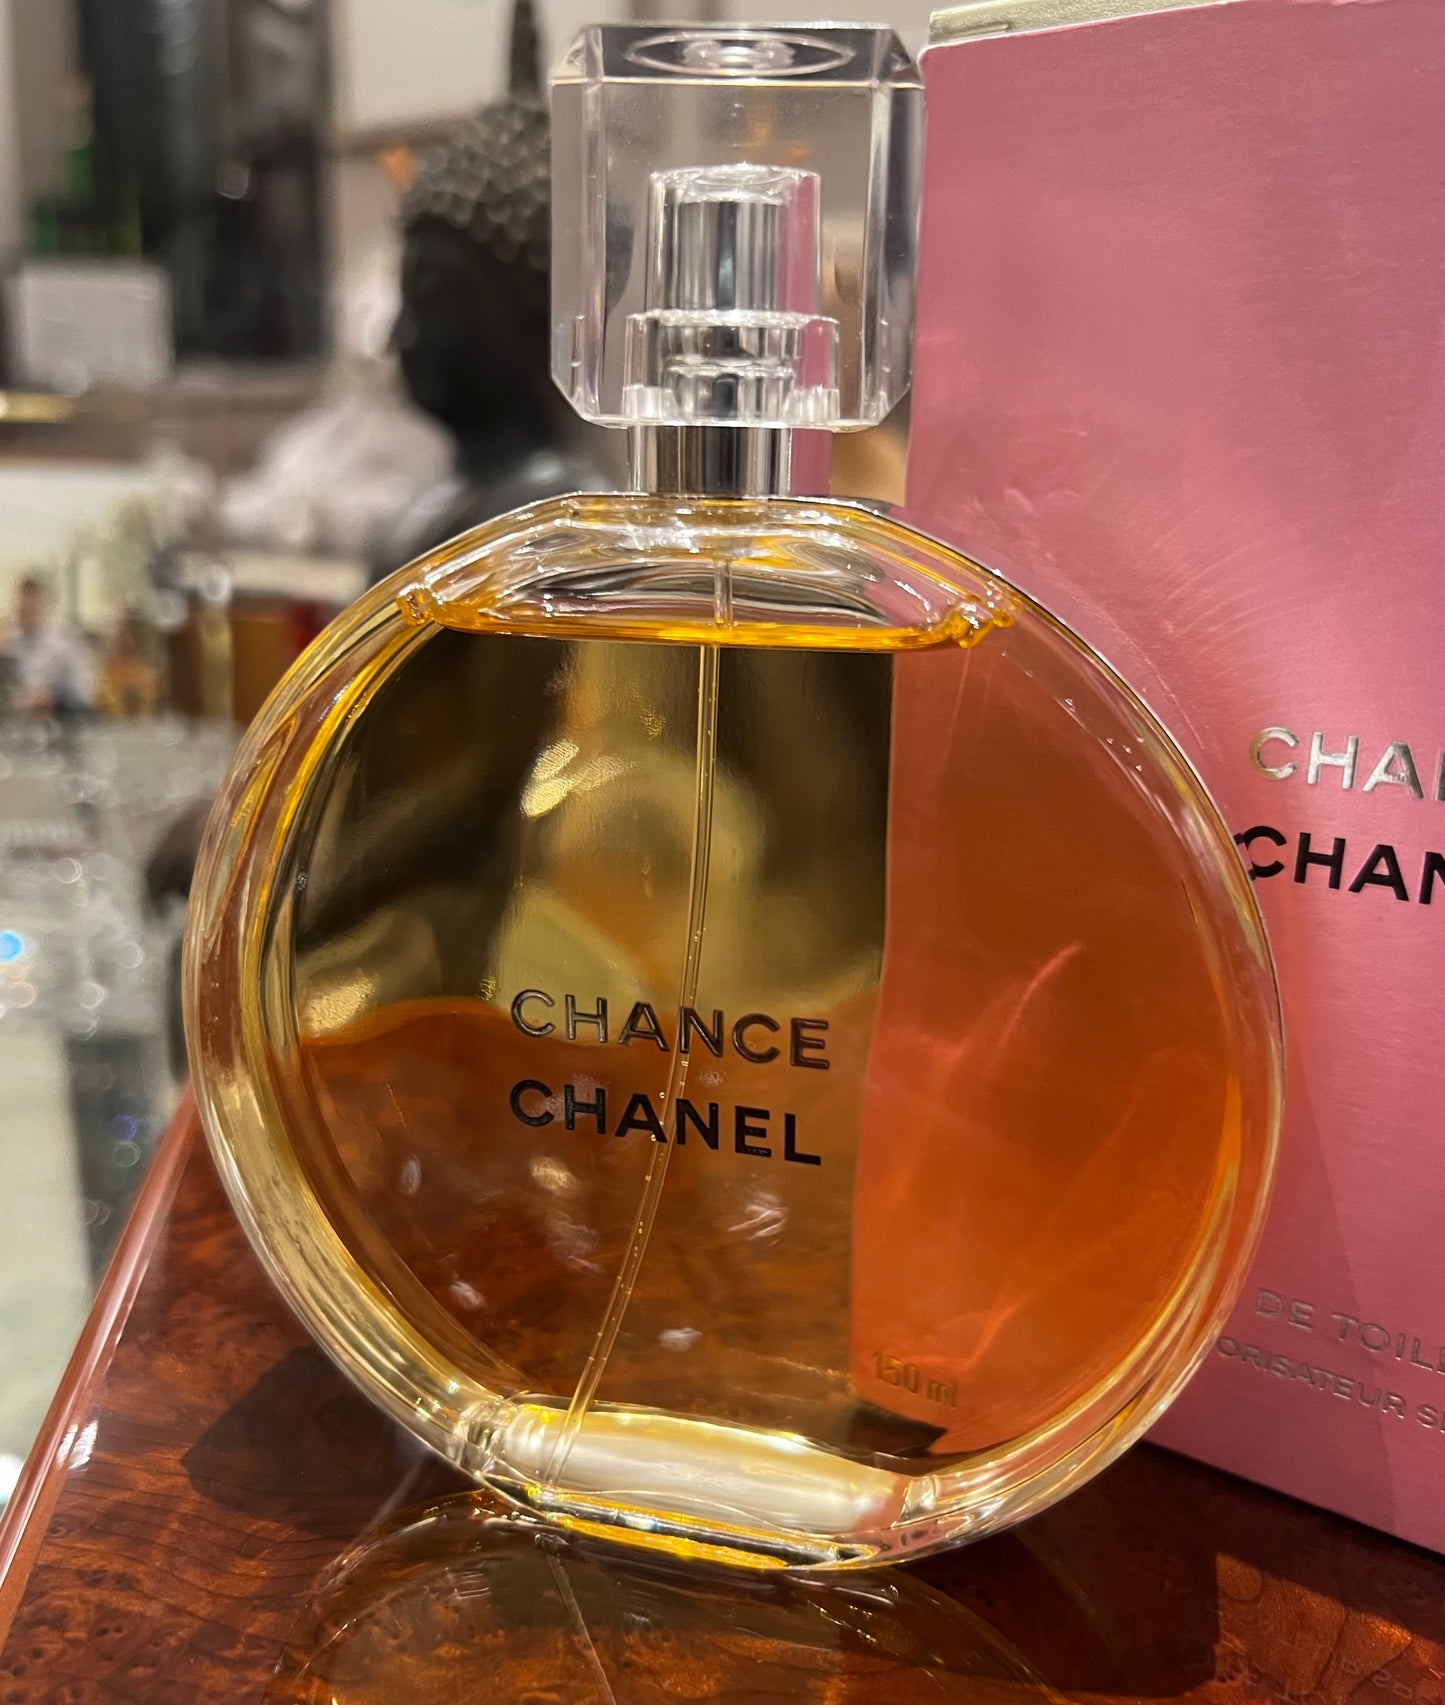 Chanel Chance Eau De Toilette Spray,Perfume for Women, 5 oz